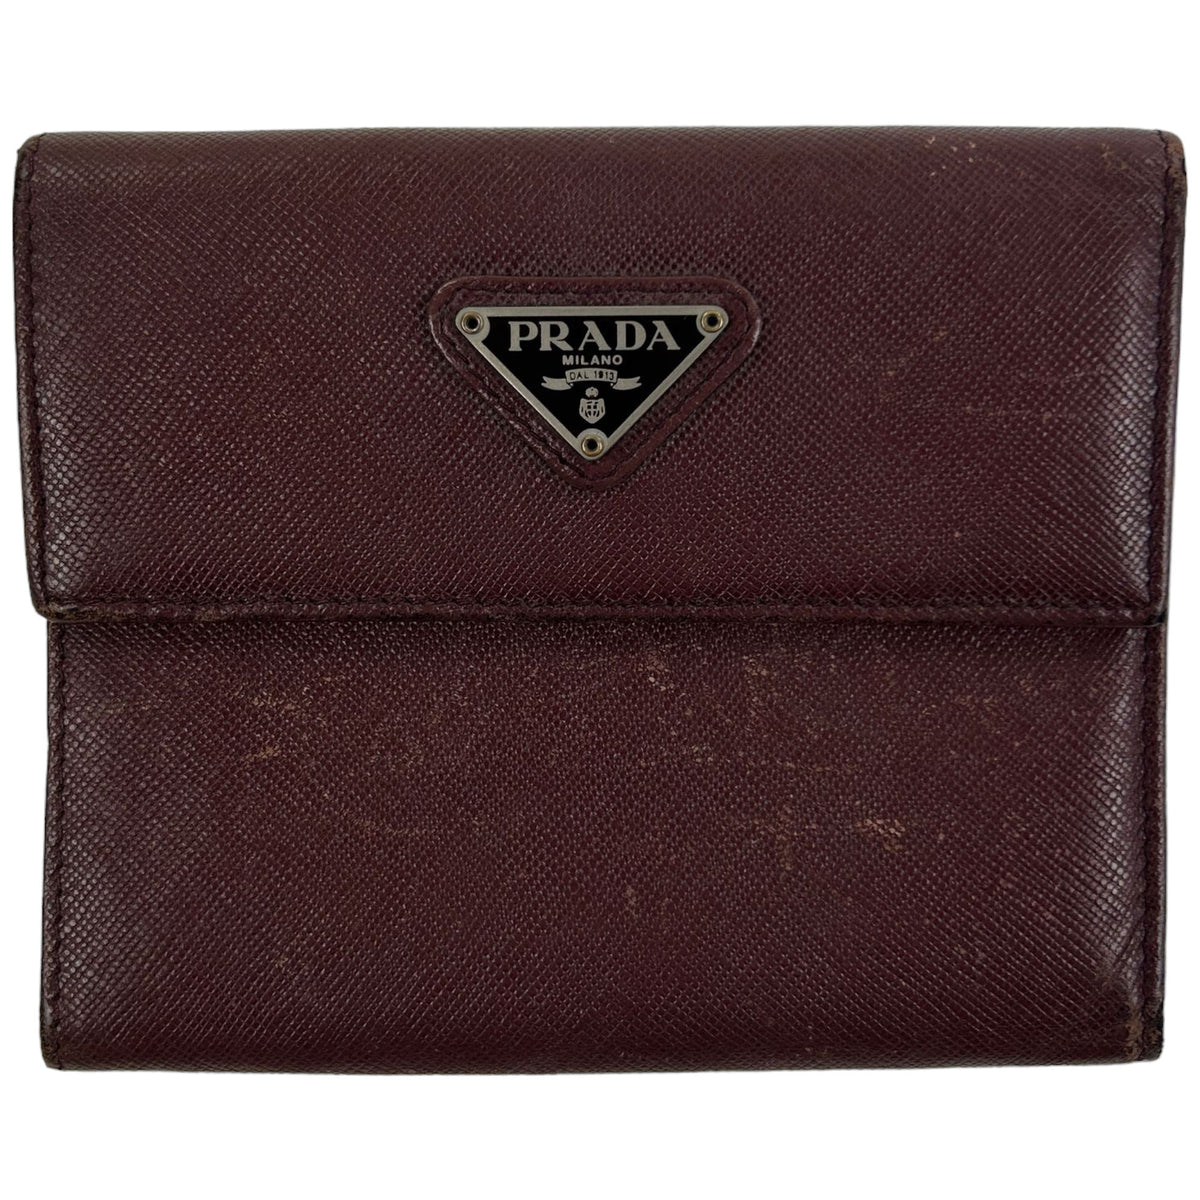 Vintage Prada Leather Wallet